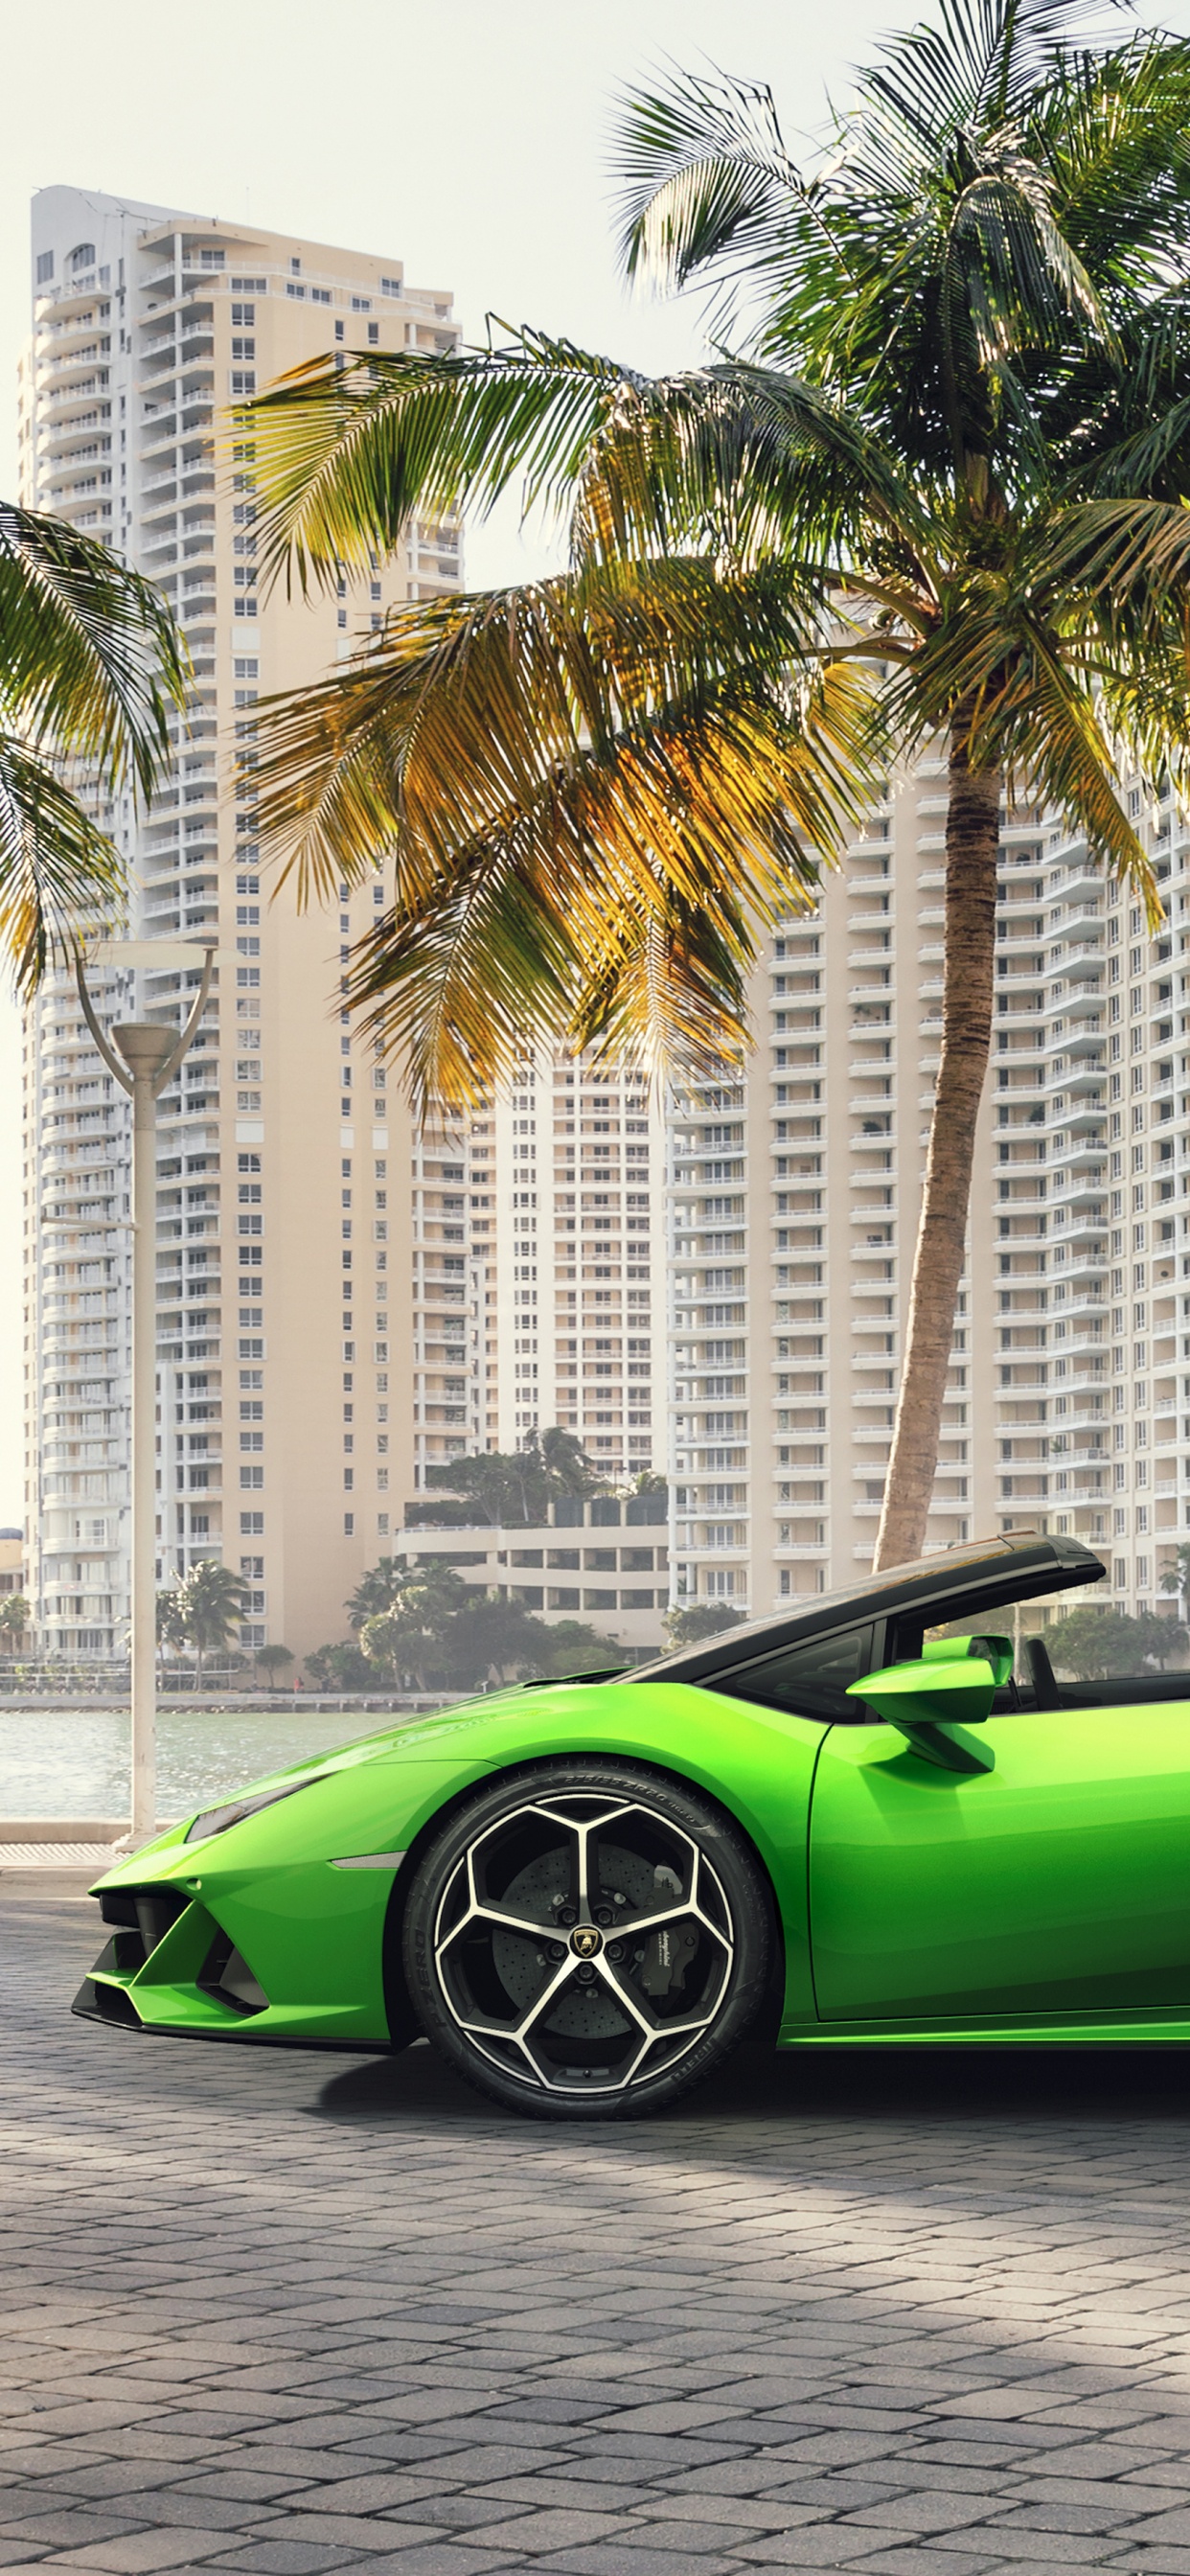 Green Ferrari Sports Car on Road During Daytime. Wallpaper in 1242x2688 Resolution